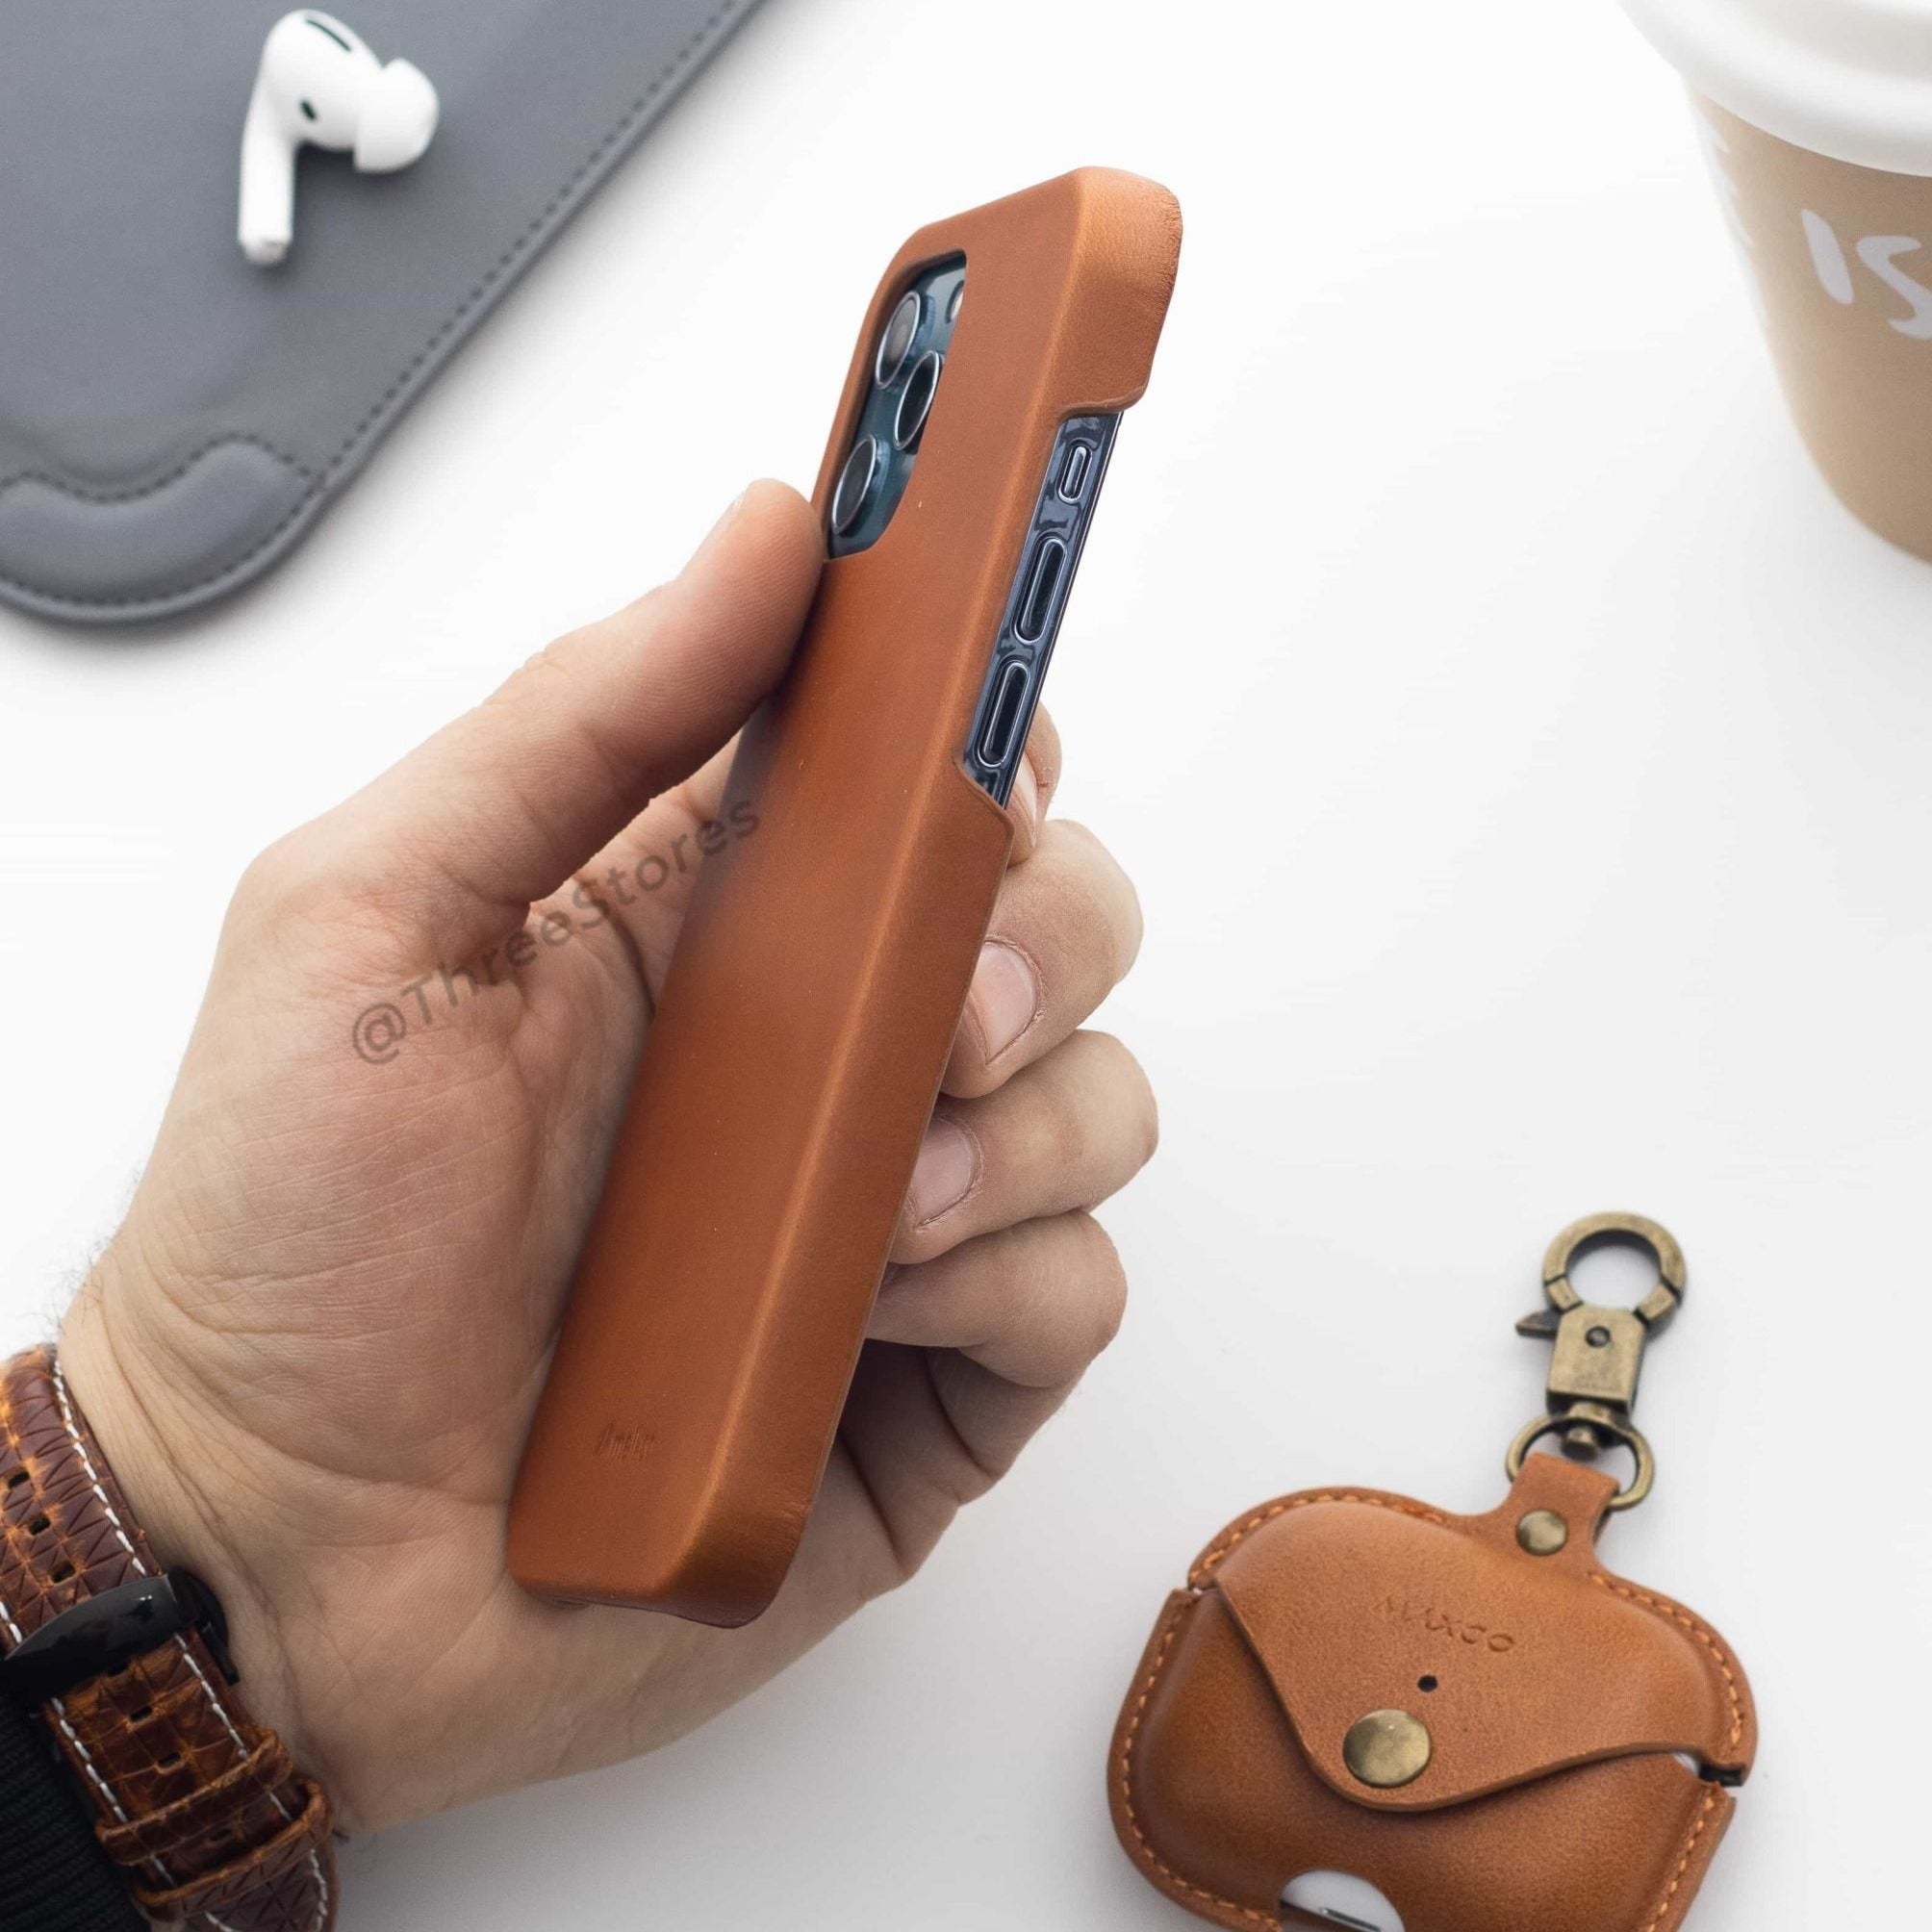 Melkco Slim Leather Case iPhone 11 Pro Max